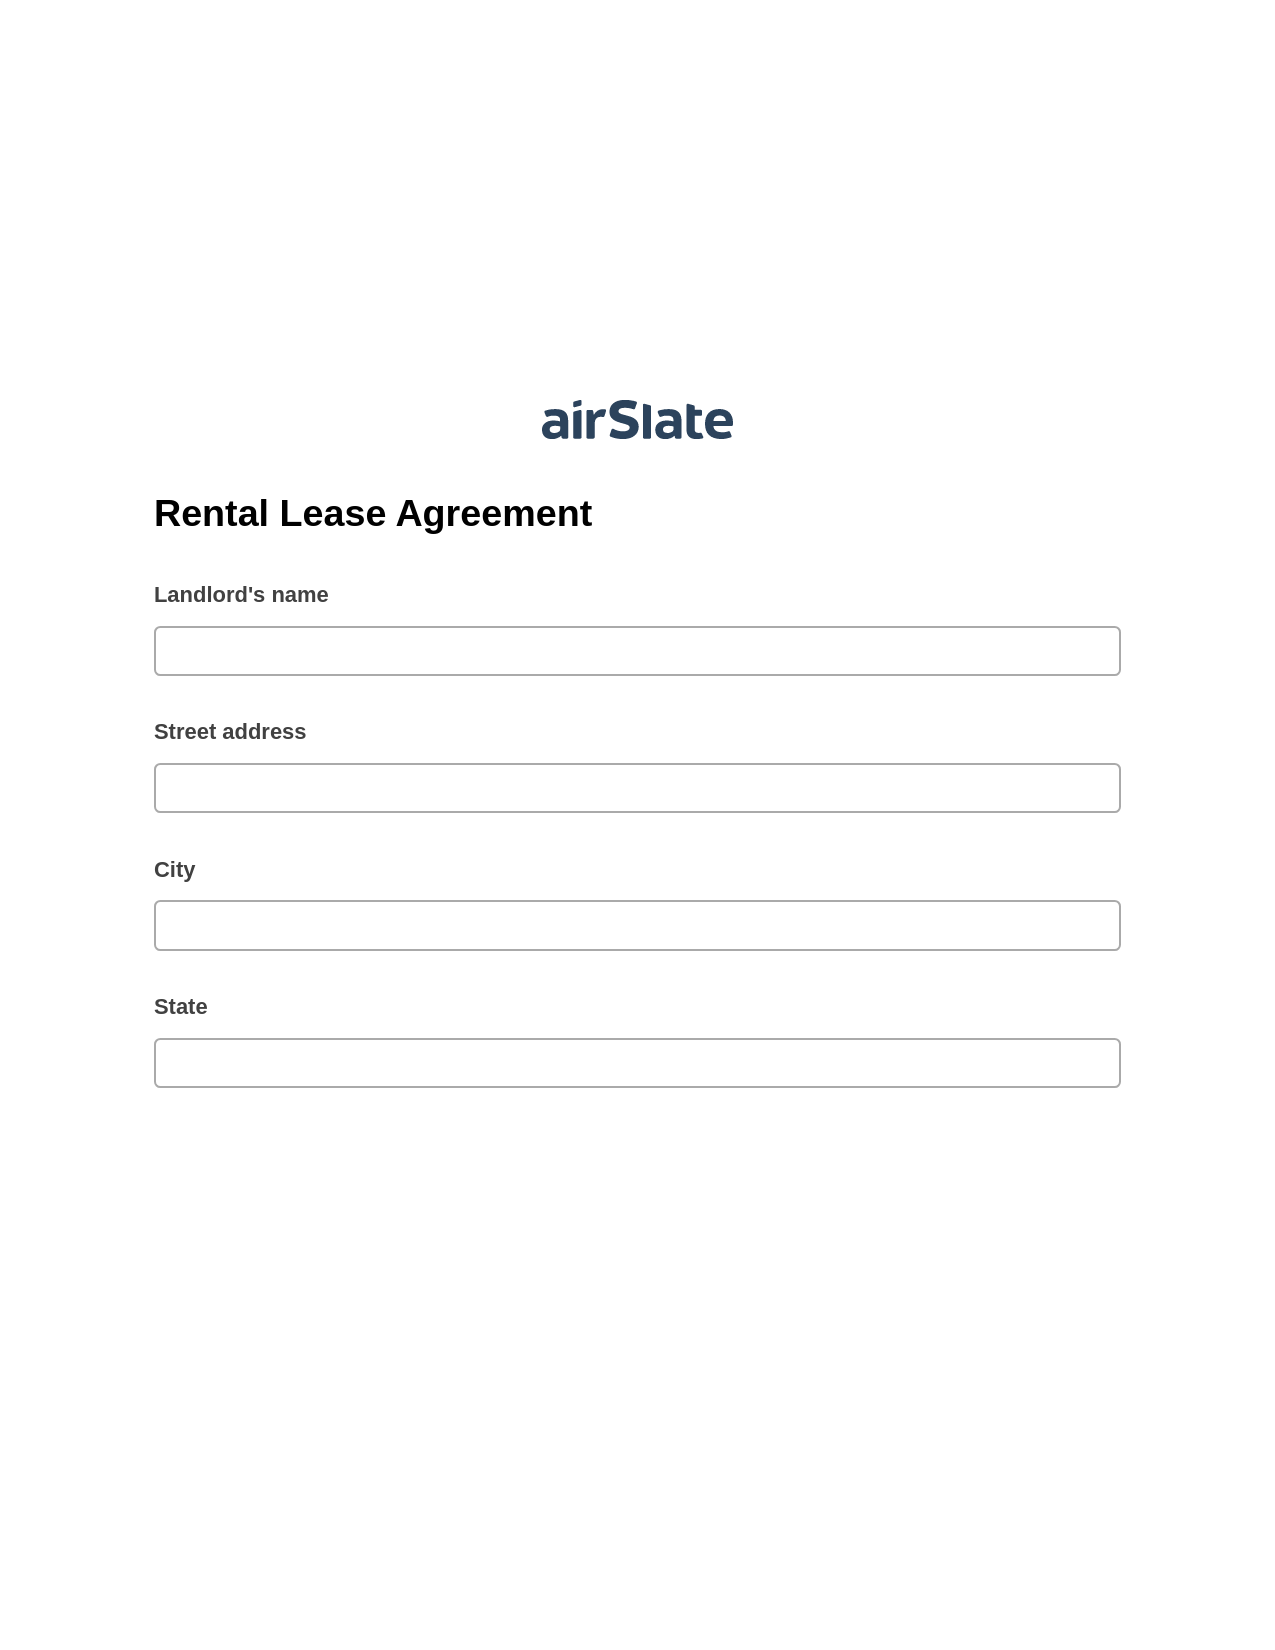 Rental Lease Agreement Pre-fill from MySQL Dropdown Options Bot, Jira Bot, OneDrive Bot